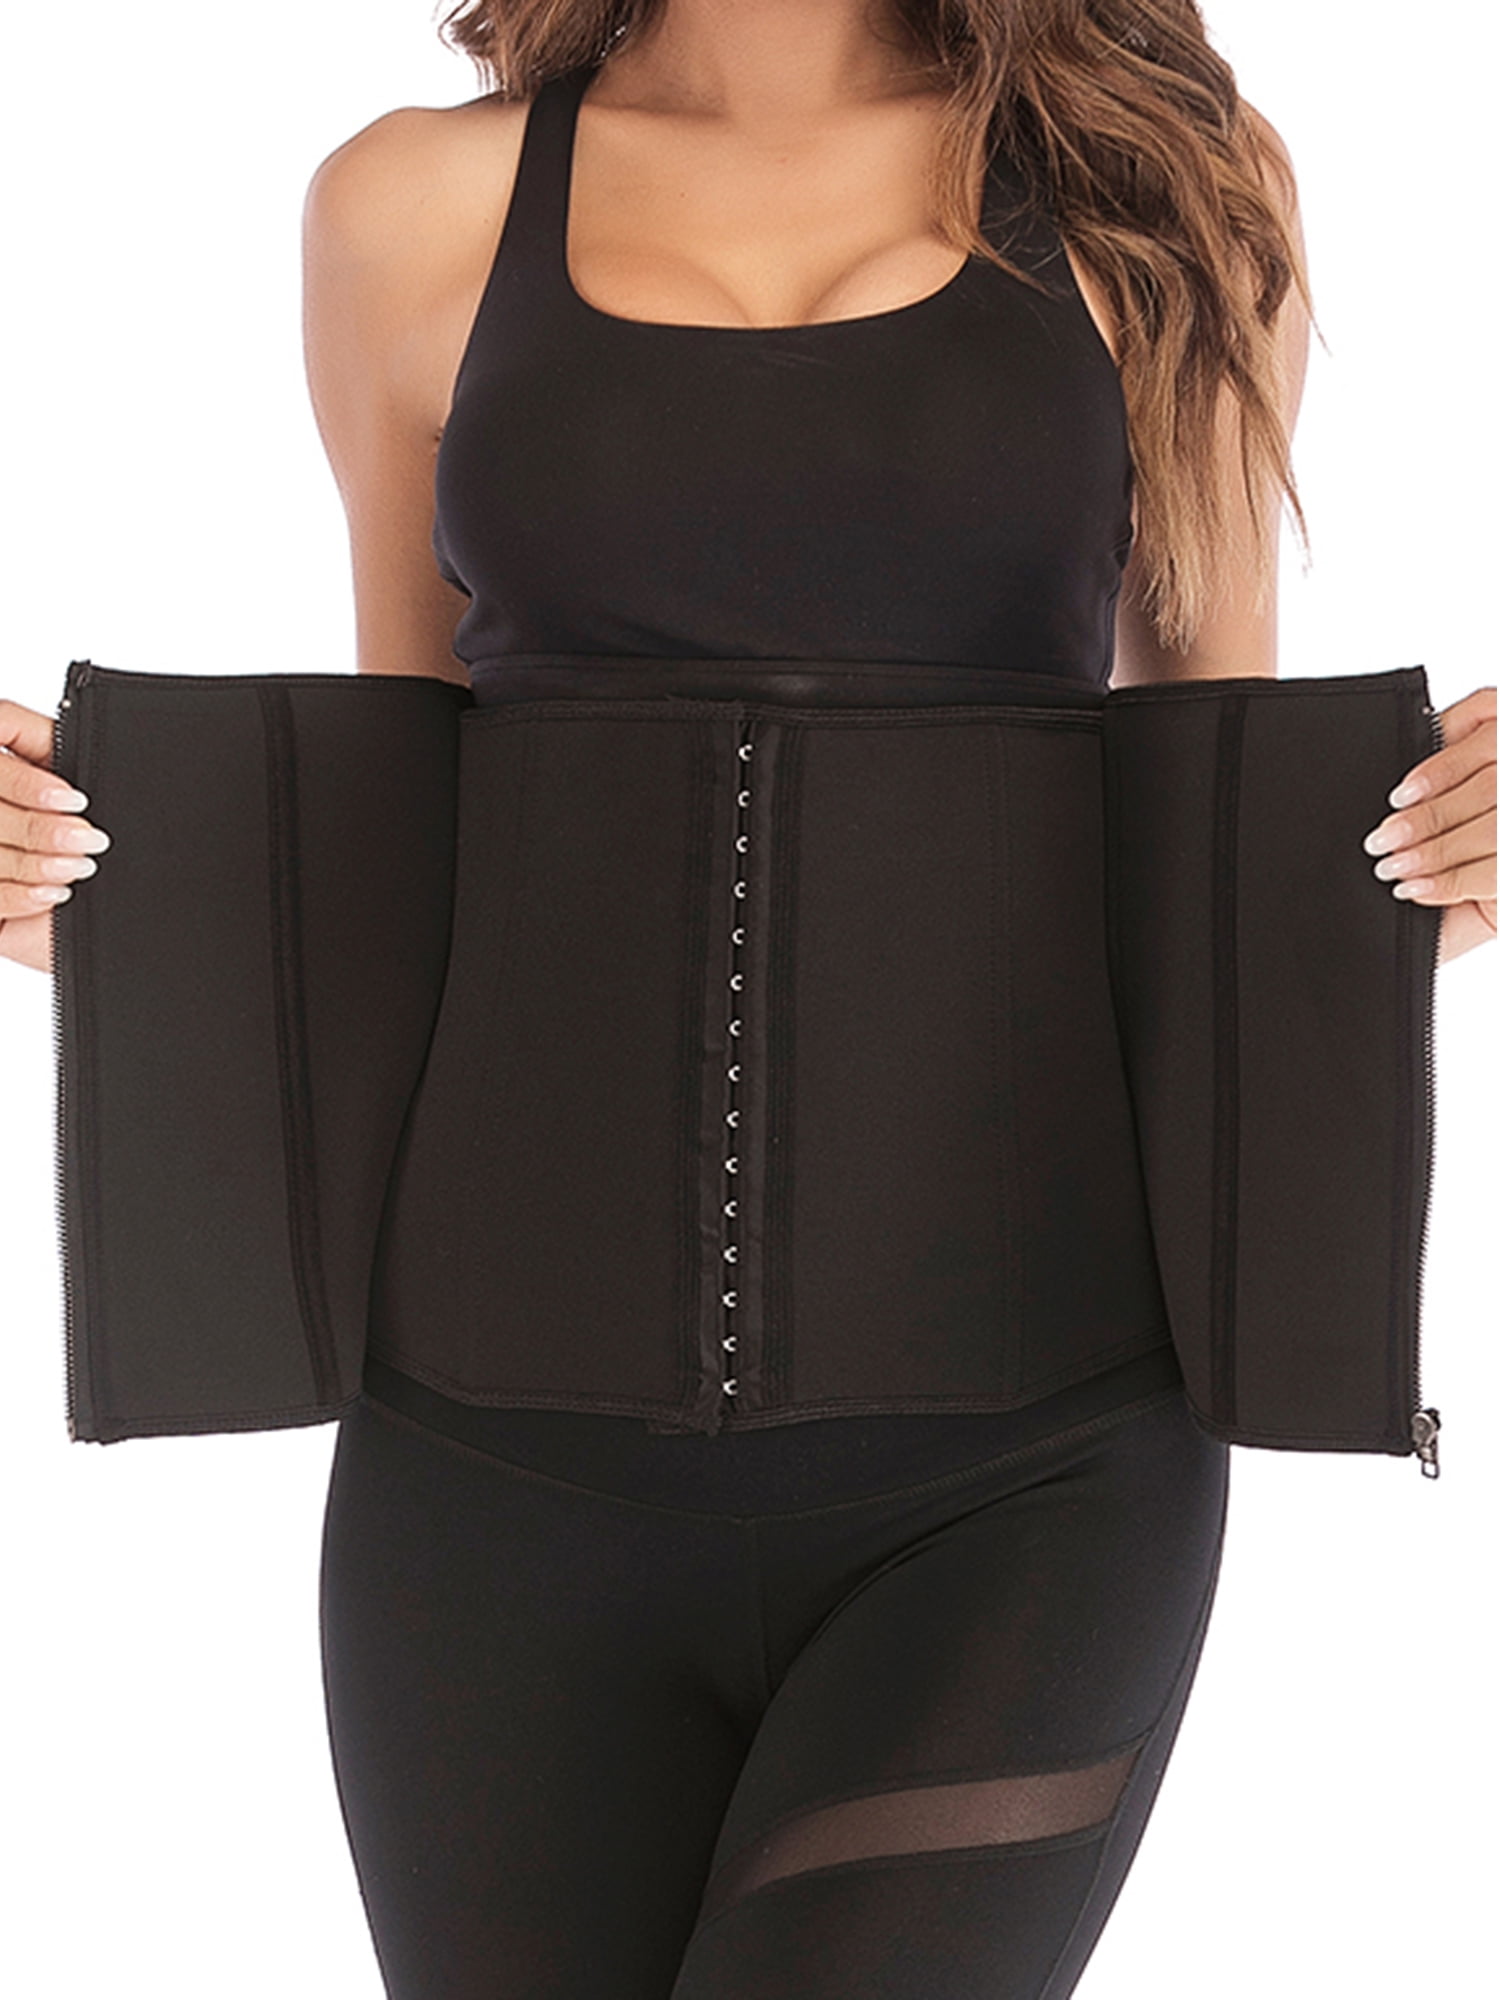 Amazingjoys Waist Trainer Corset for Weight Loss Tummy Control Body Shaper Neoprence Workout Sweat Belt Shapewear for Women